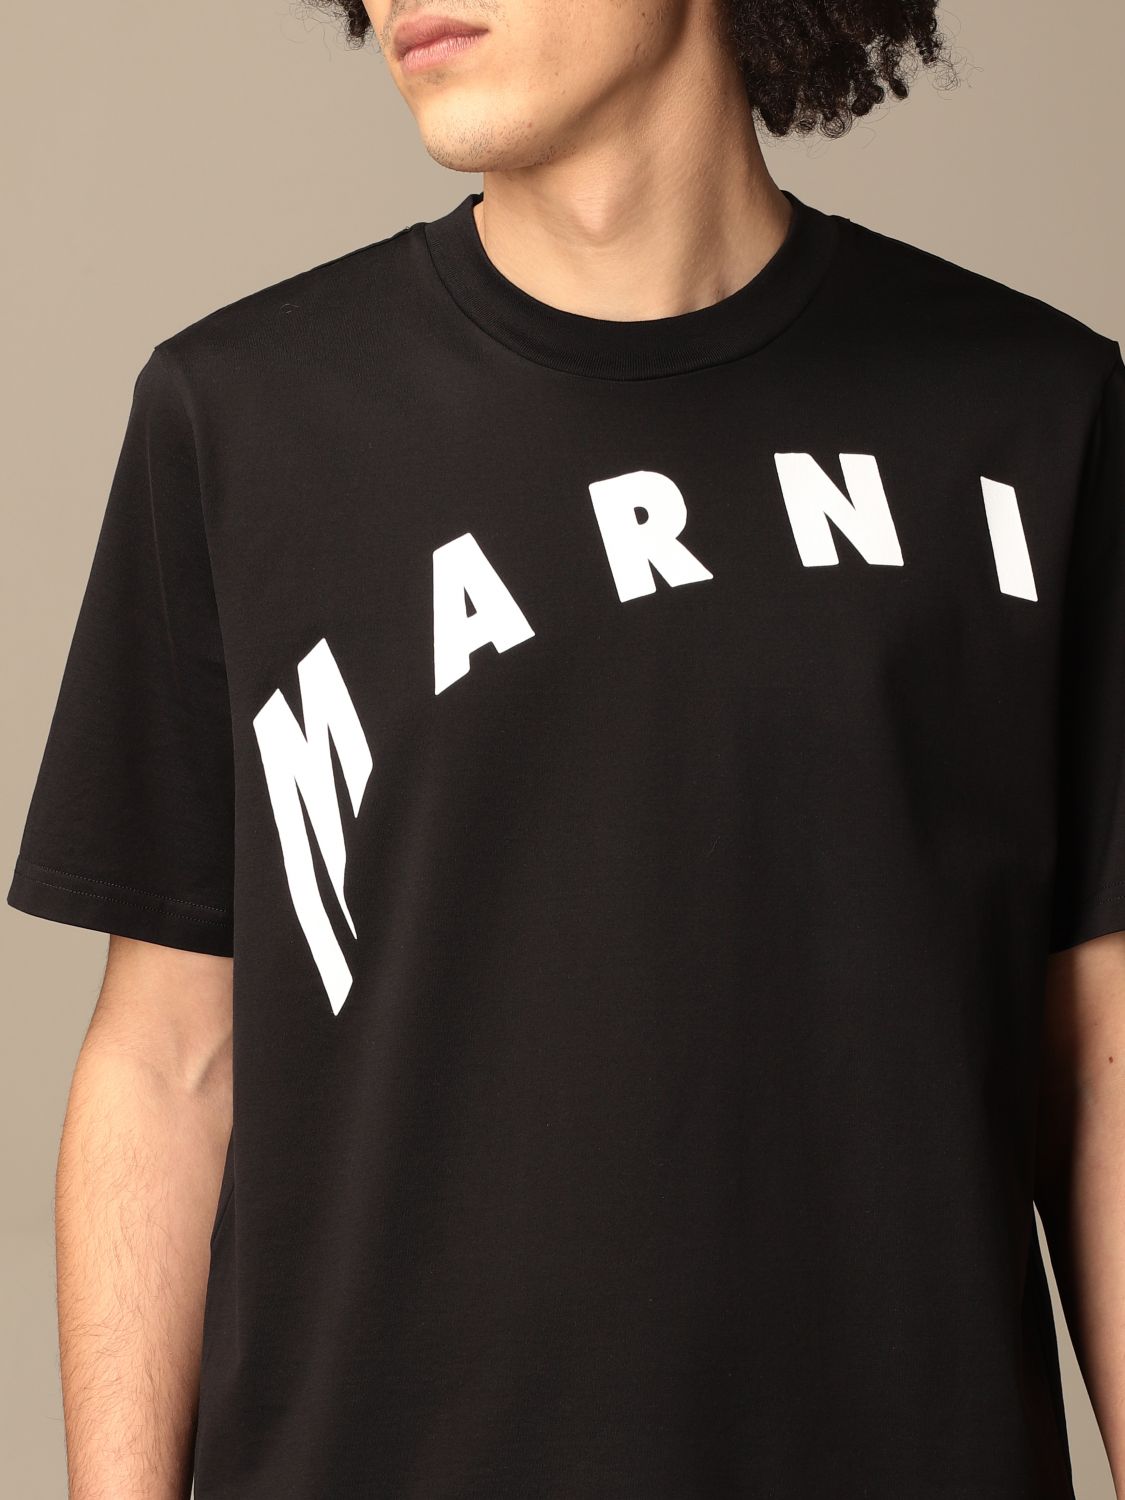 MARNI: cotton t-shirt with distorted logo - Black | Marni t-shirt ...